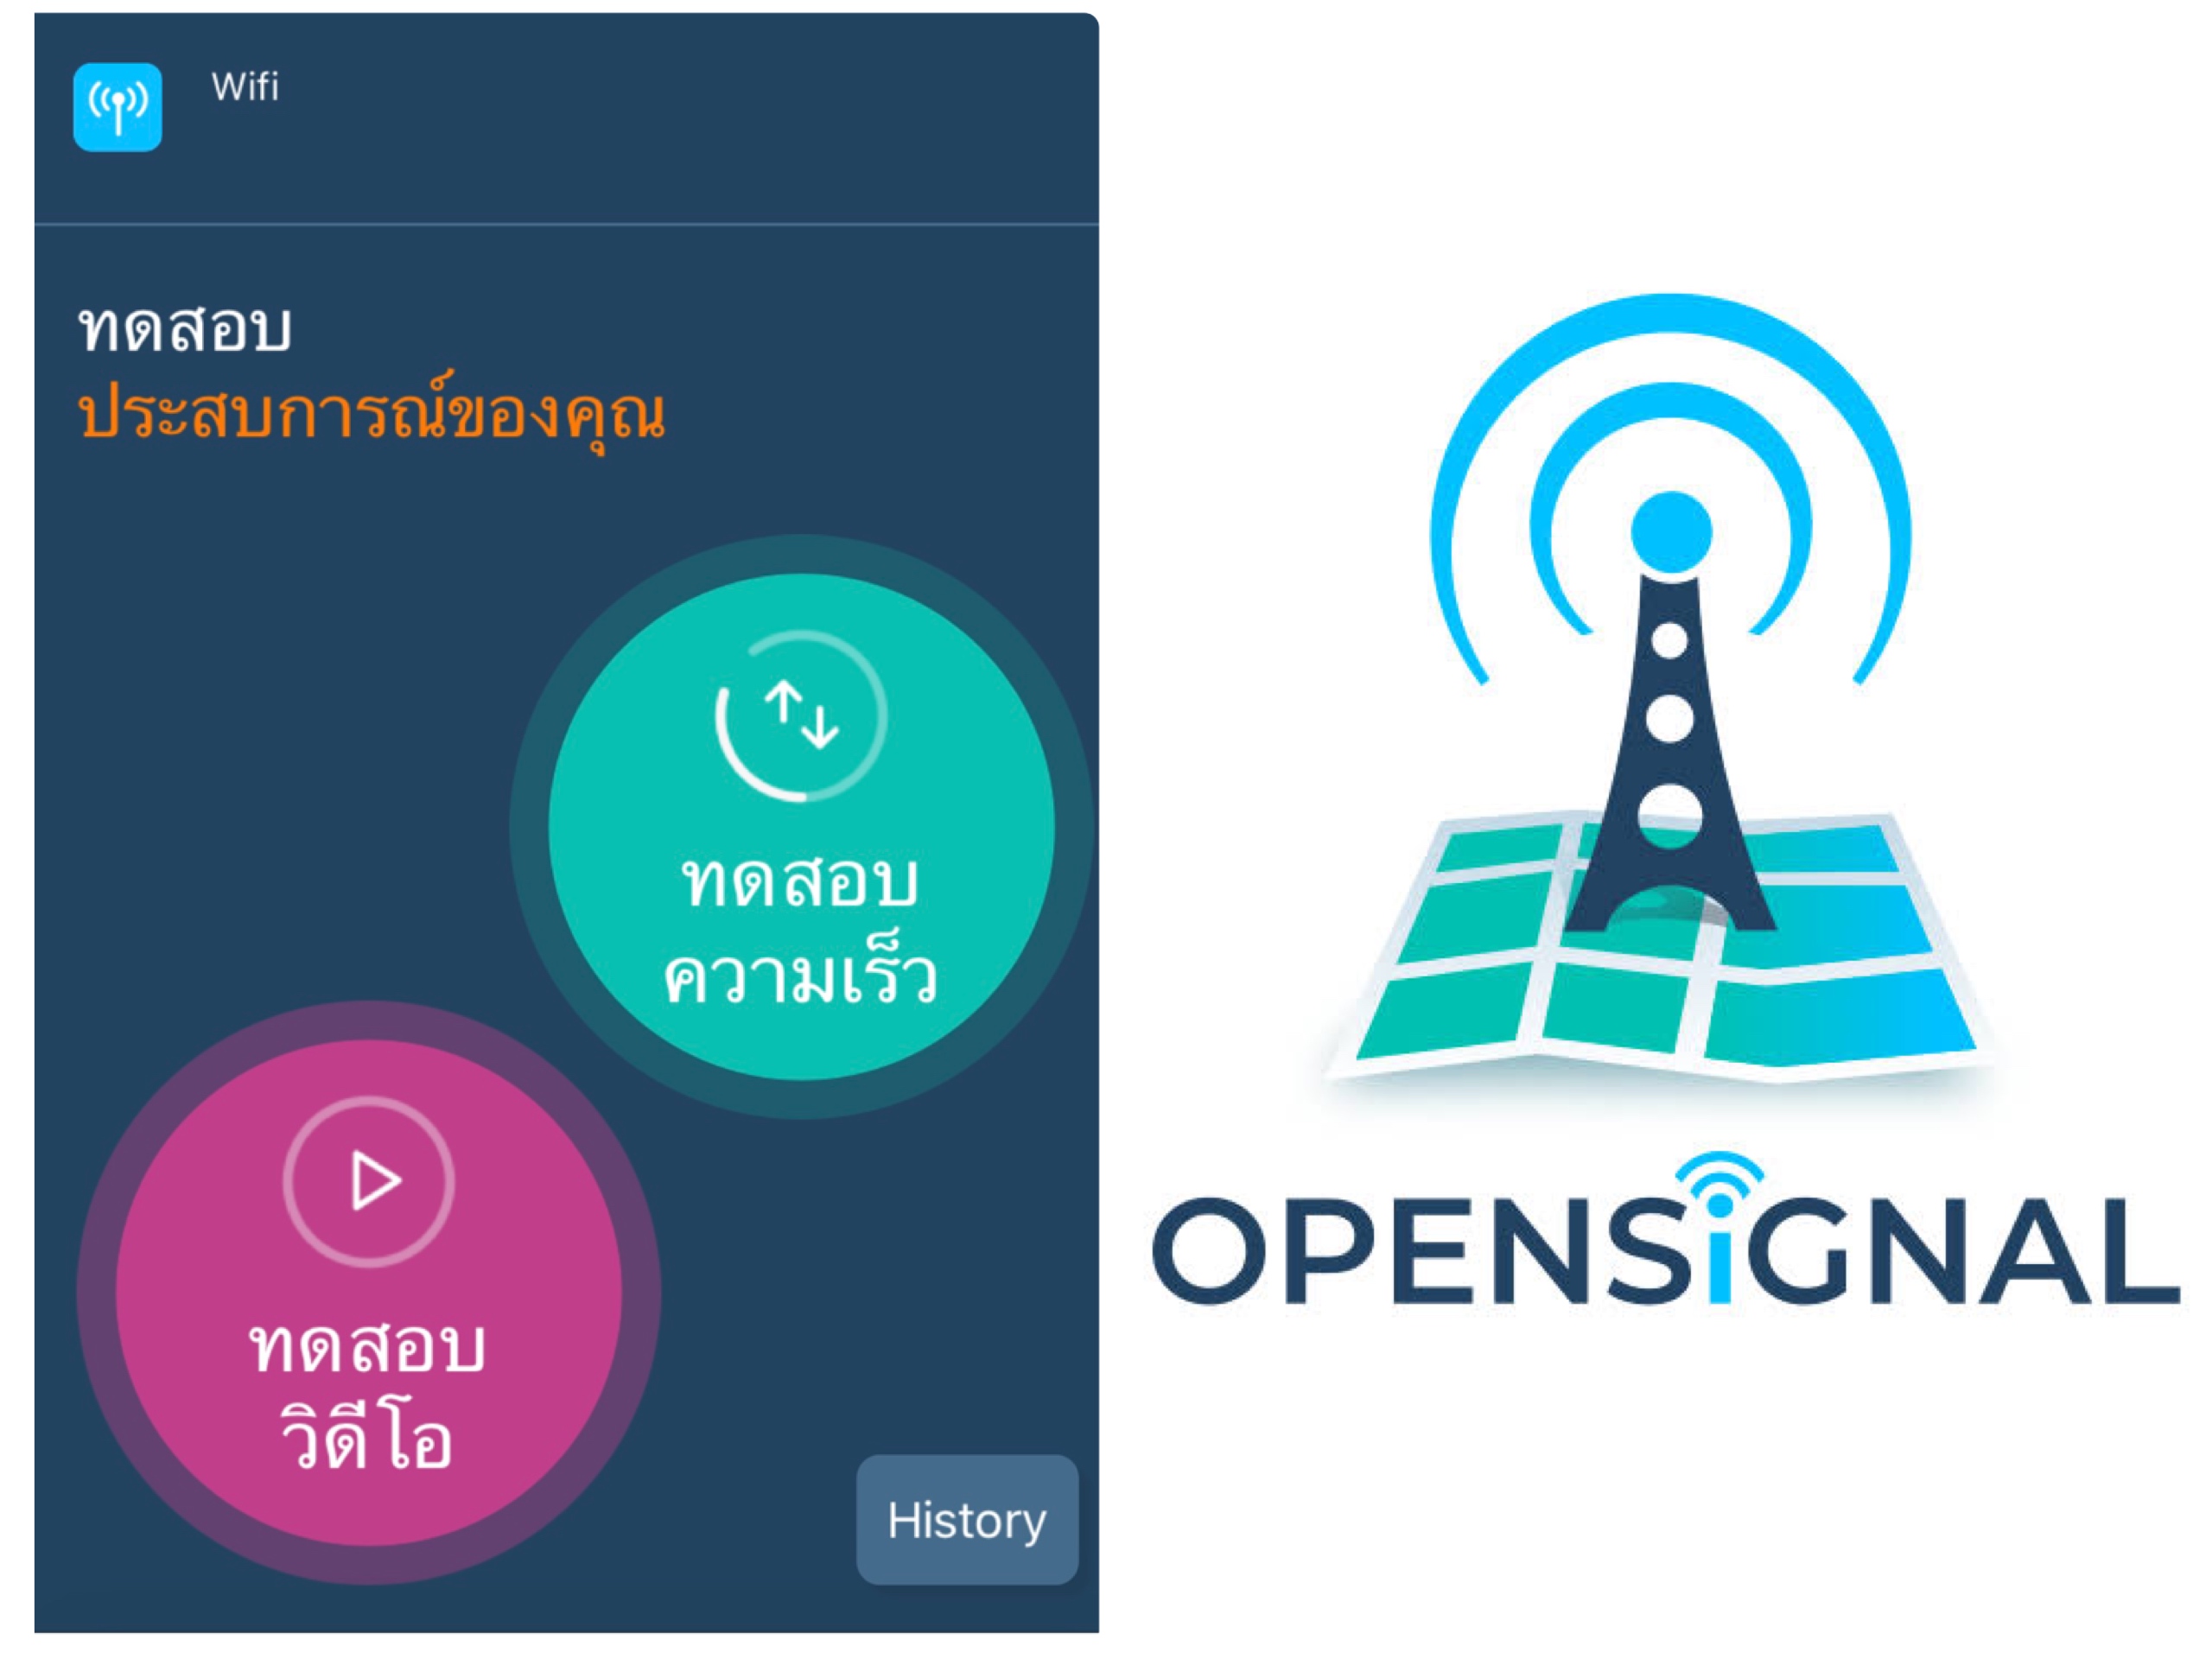 Opensignal เผยรายงานประสบการณ์เครือข่ายมือถือของประเทศไทย เดือนพ.ค 65 พบว่า AIS ยังครองแชมป์กวาดทุกรางวัล 5G